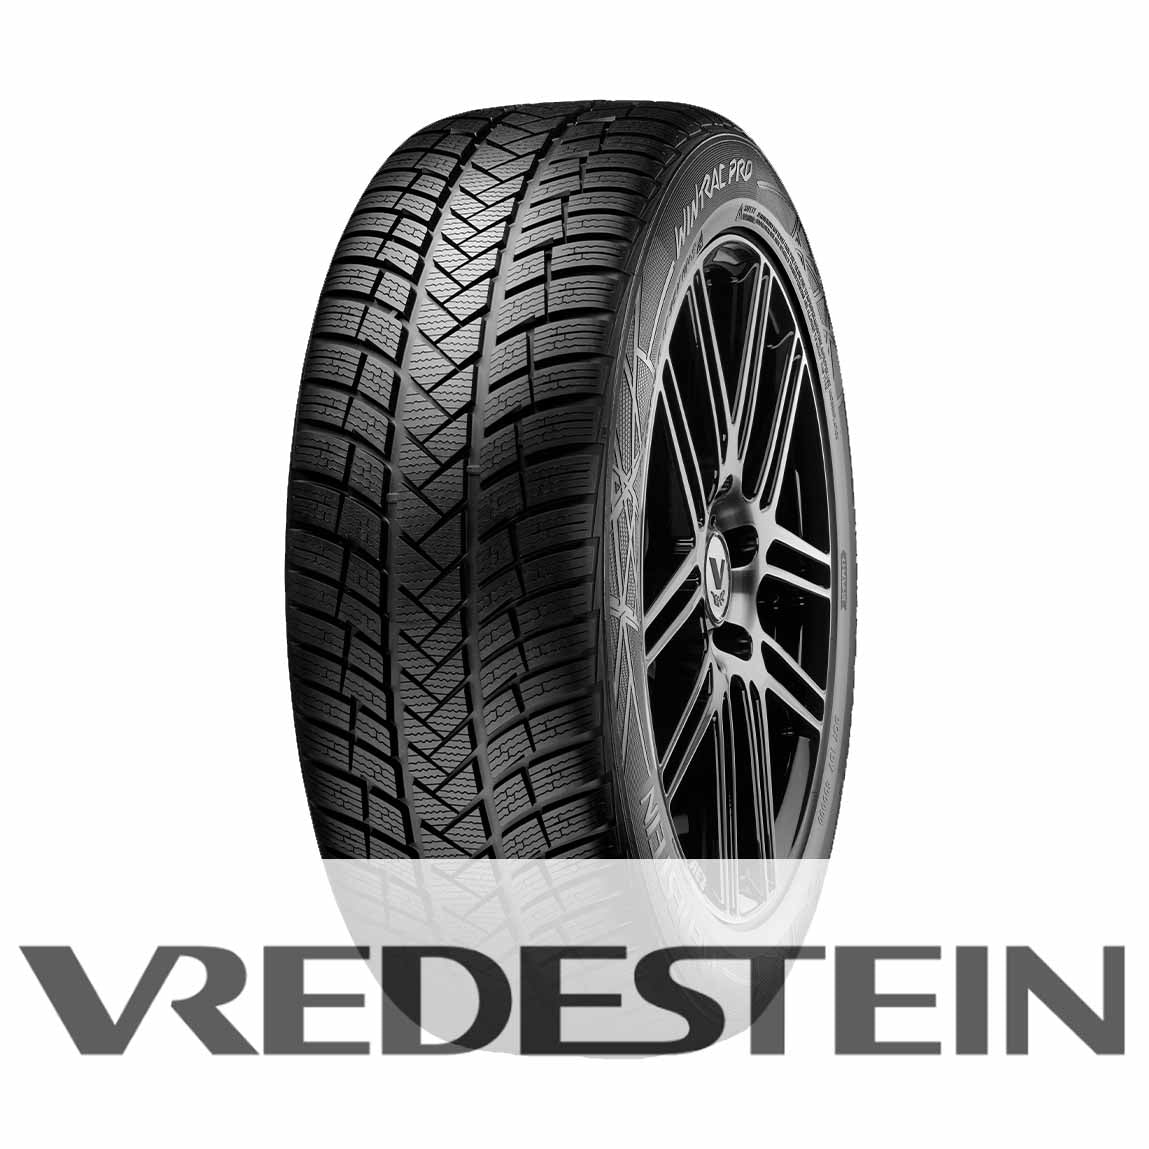 Vredestein Wintrac Pro 225/55 R17 101V XL